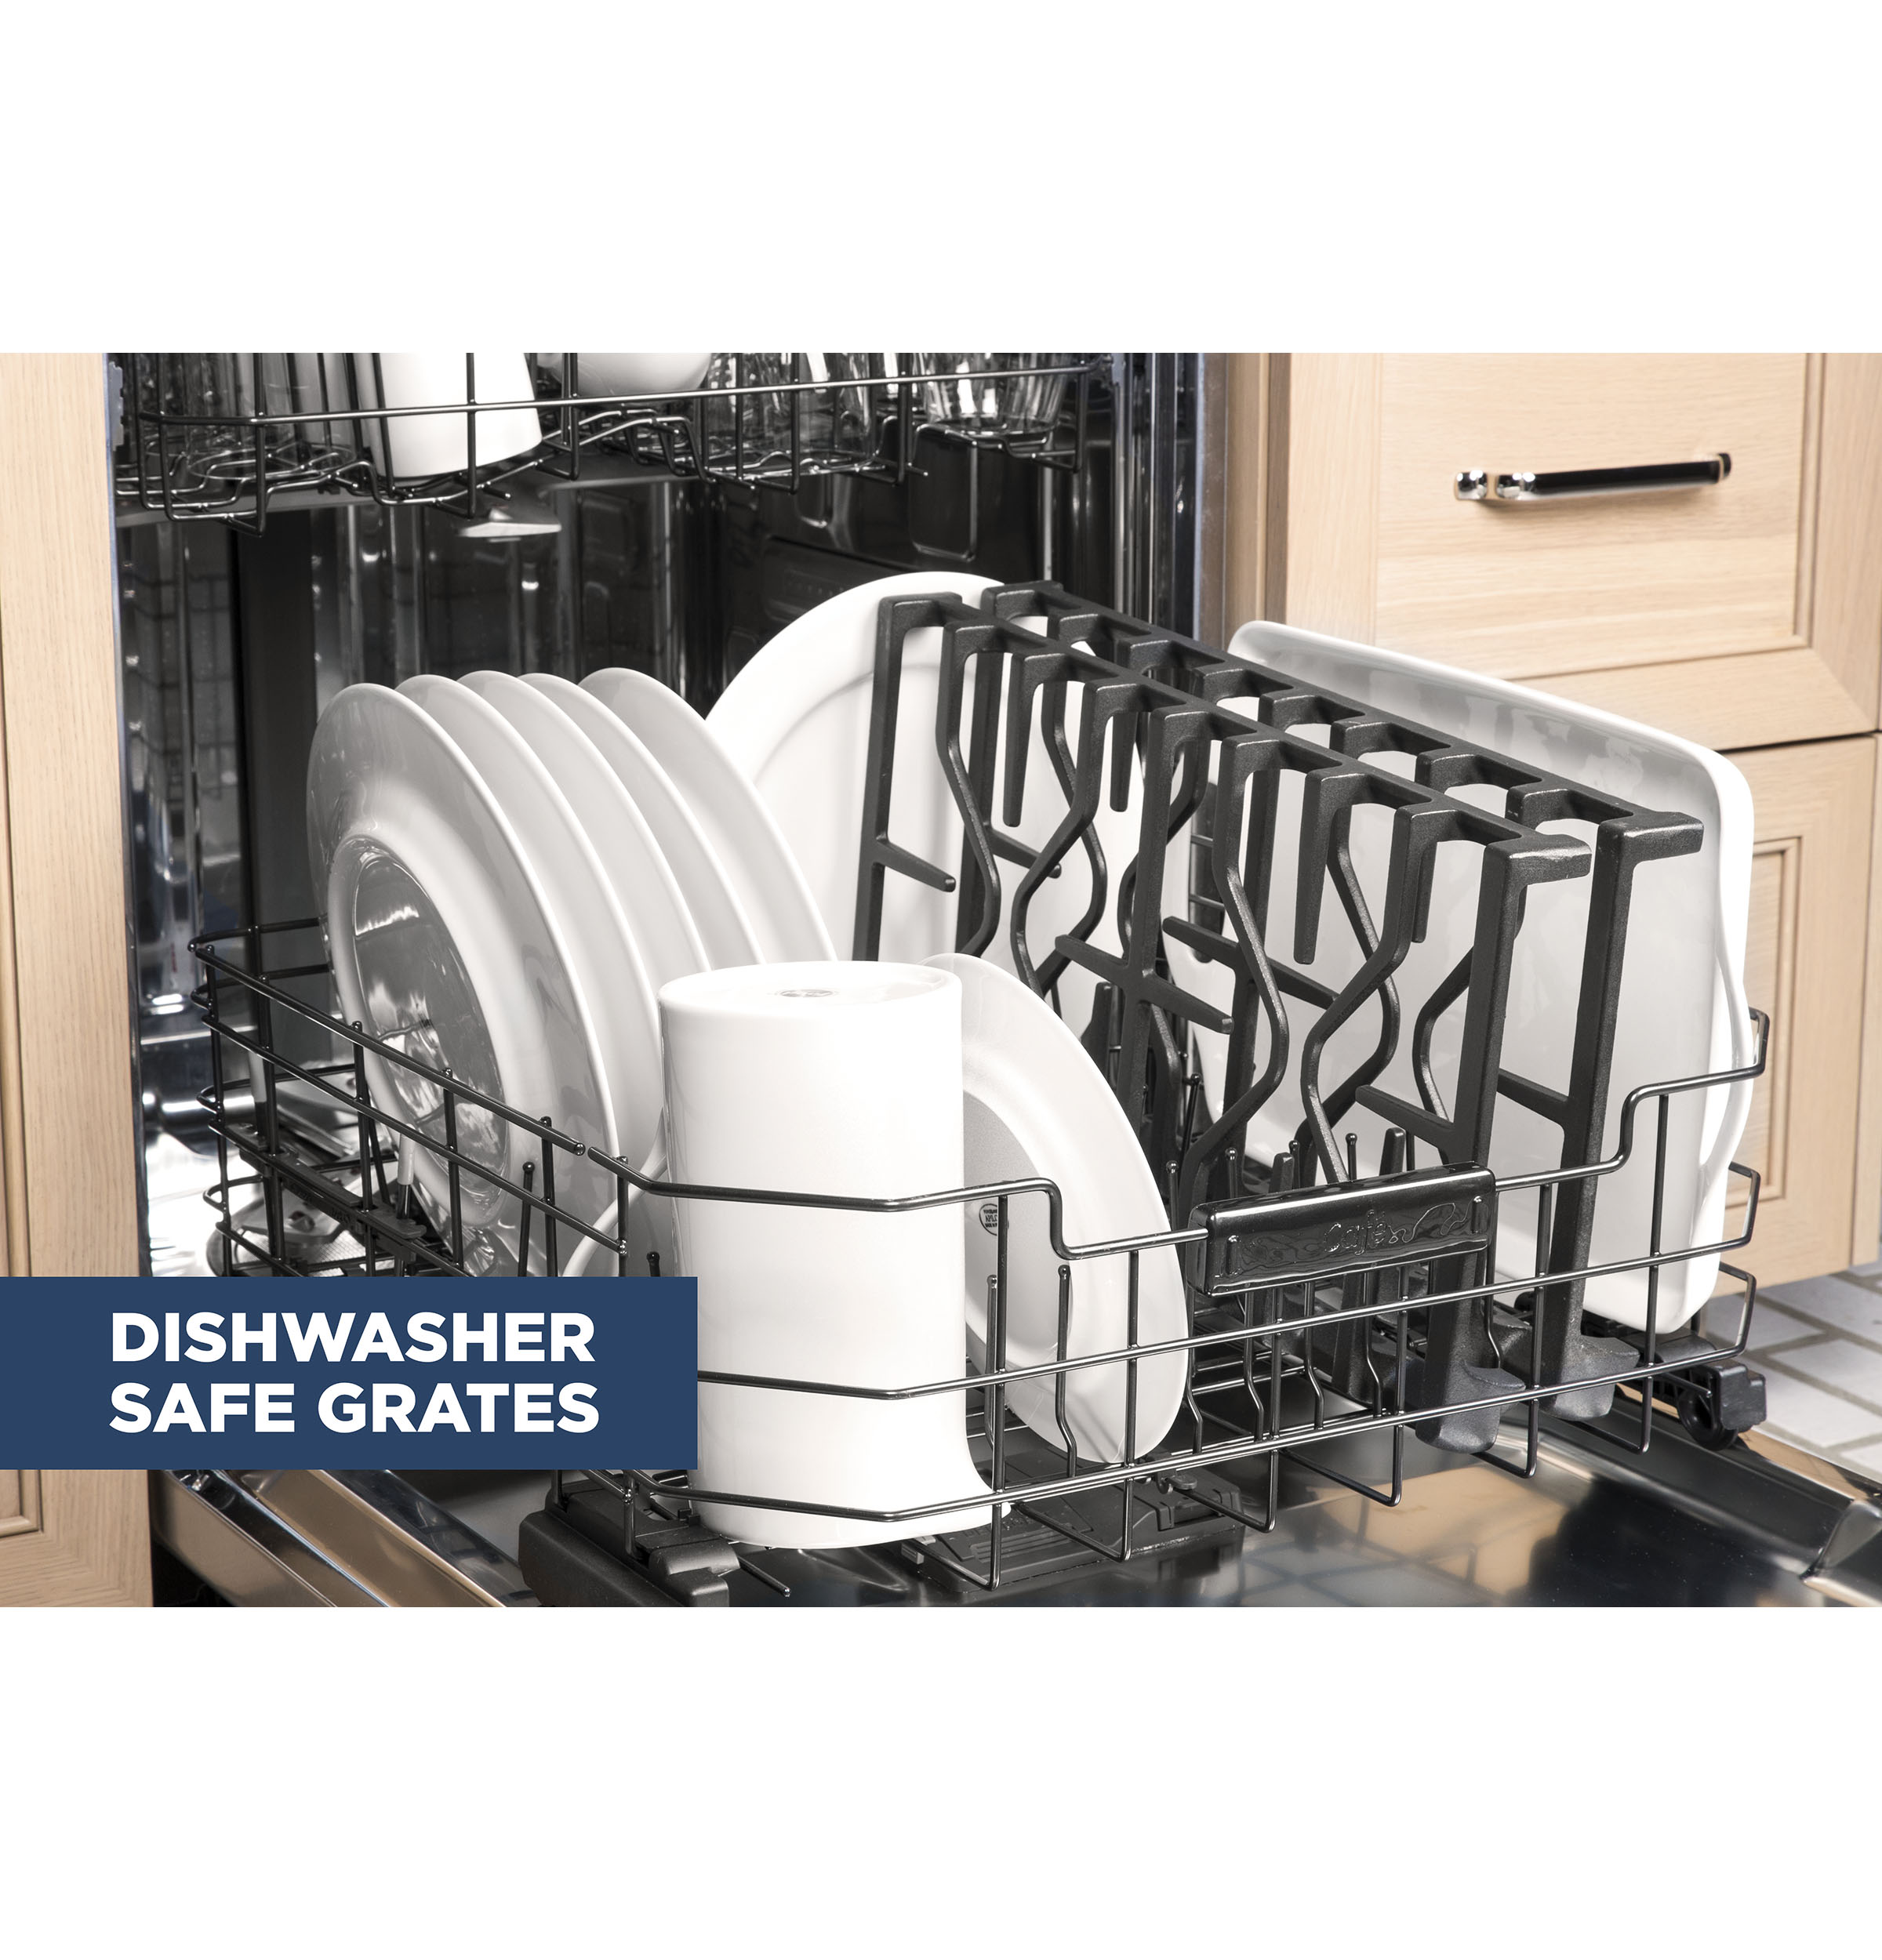 Heavy duty, dishwasher safe grates